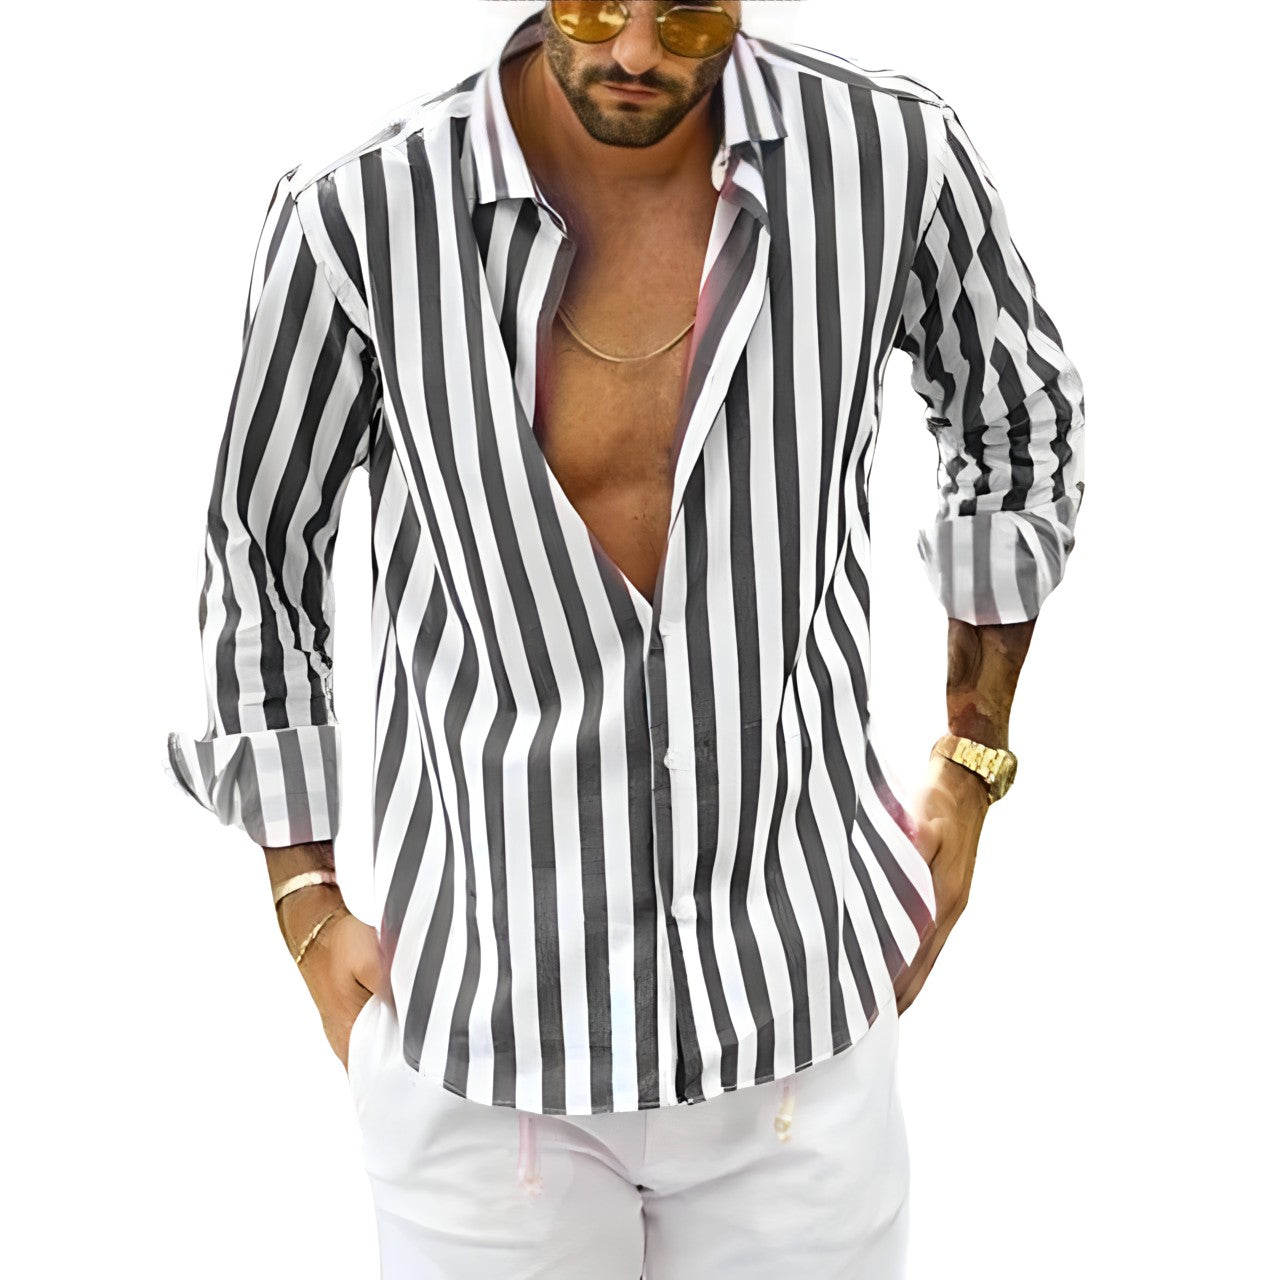 Régis - Striped men's shirt 